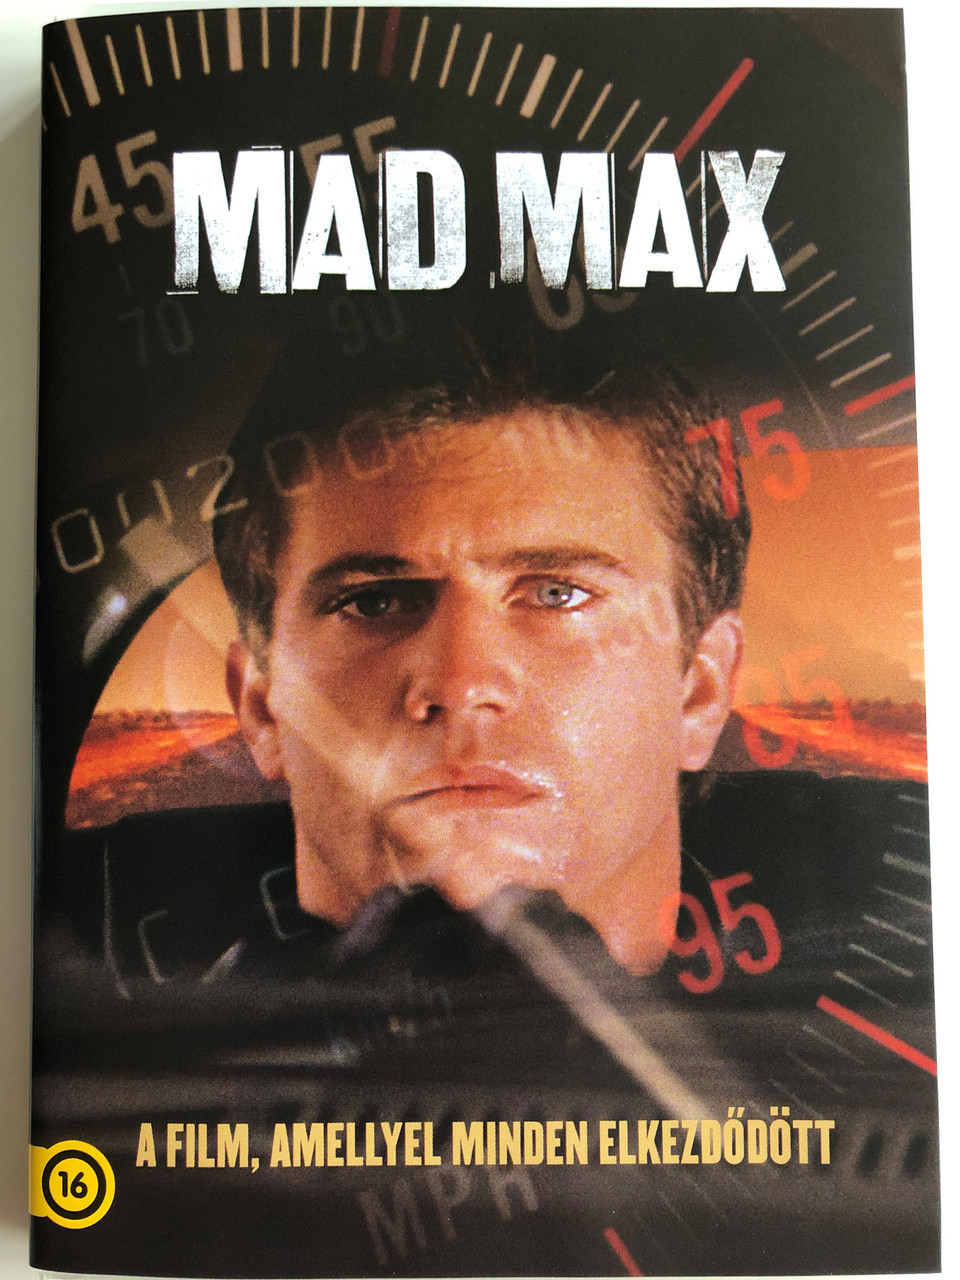 Mad Max DVD 1979 / Directed by George Miller / Starring: Mel Gibson, Joanne  Samuel, Hugh Keays-Byrne, Geoff Parry - bibleinmylanguage